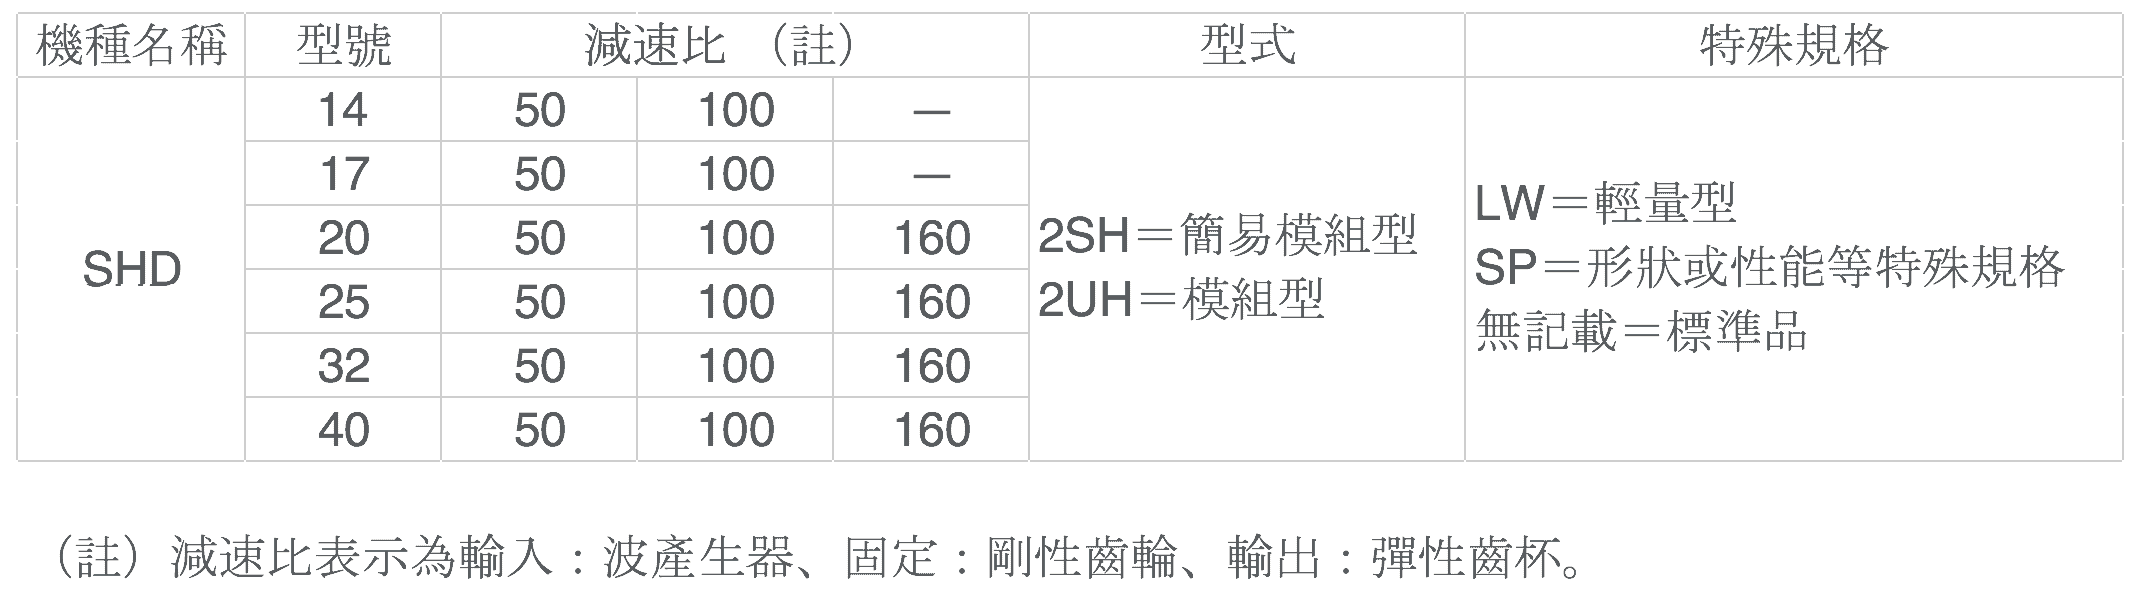 Harmonic Drive SHD 模組型 2UH 2SH Unit 減速機 規格型號表格